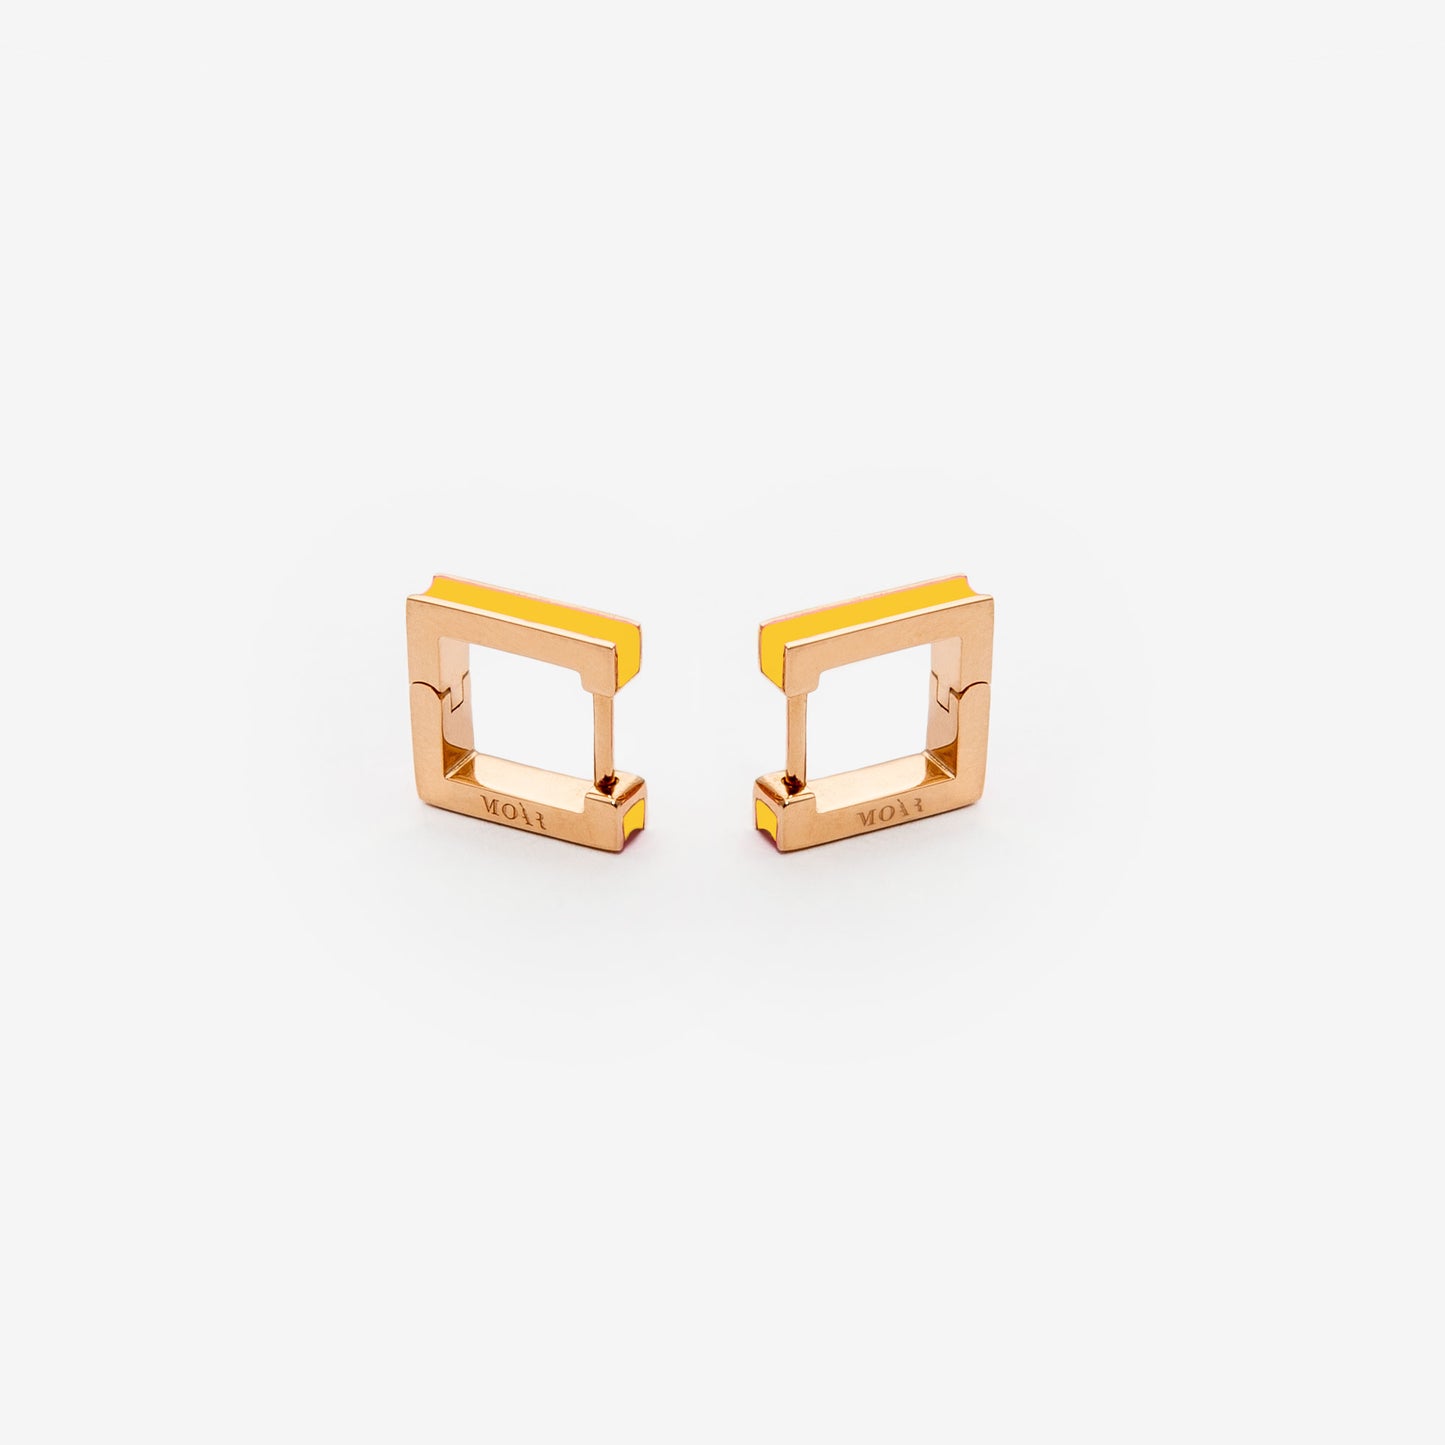 Square yellow earrings